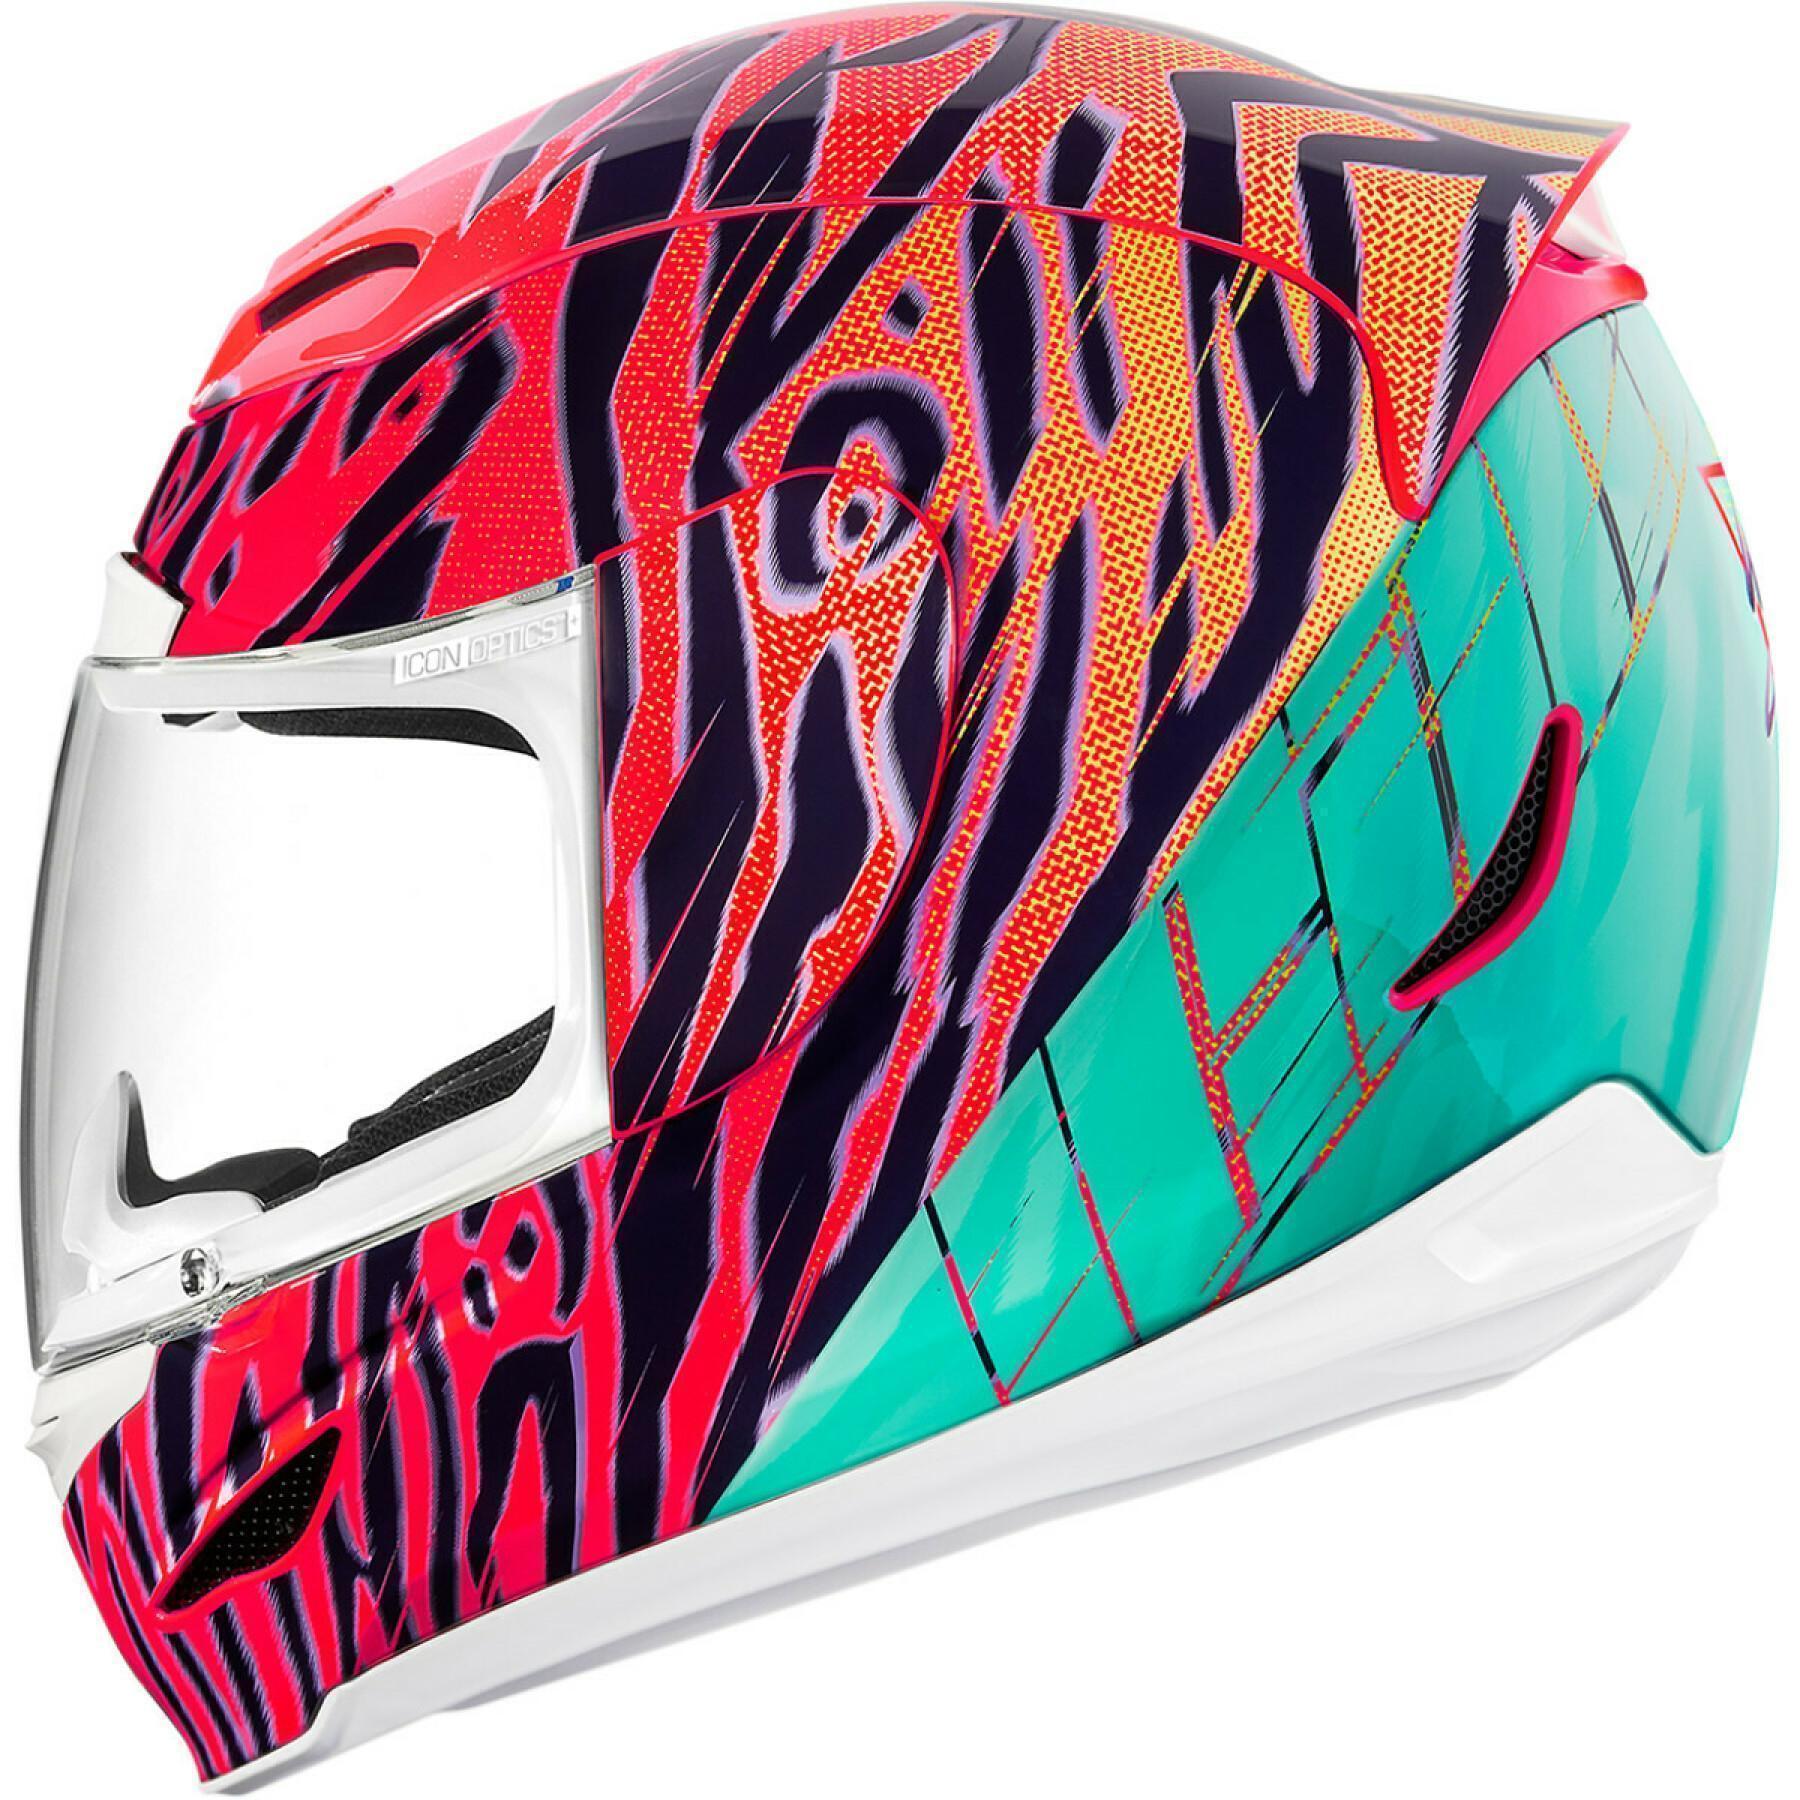 Full face motorcycle helmet Icon am wildchild